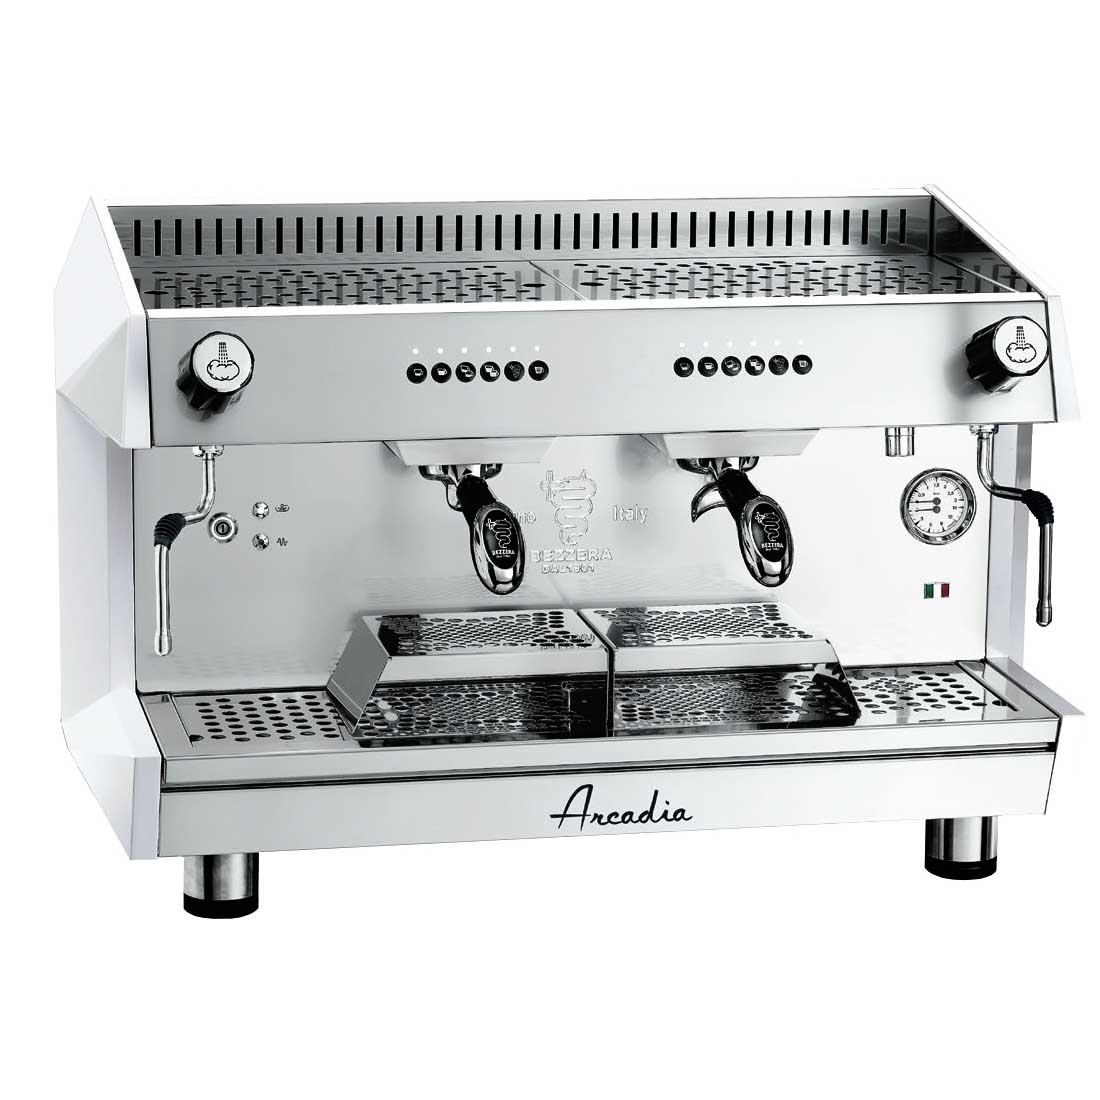 ARCADIA Professional Espresso coffee machine SS polish white 2 Group - ARCADIA-G2 Commercial Coffee machines